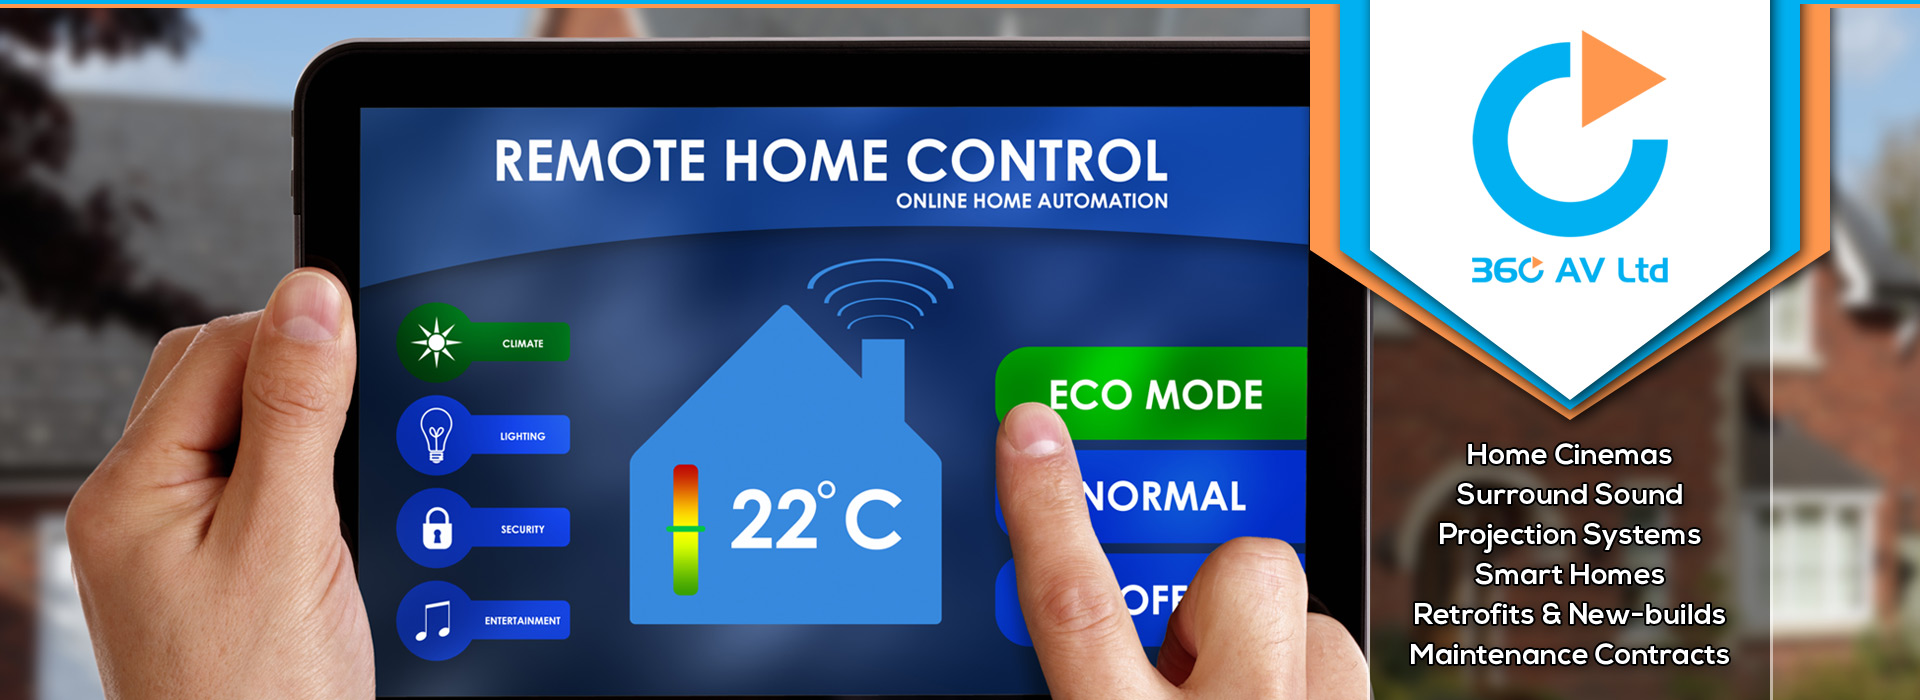 360 AV Ltd | Smart Home controlled by iPad